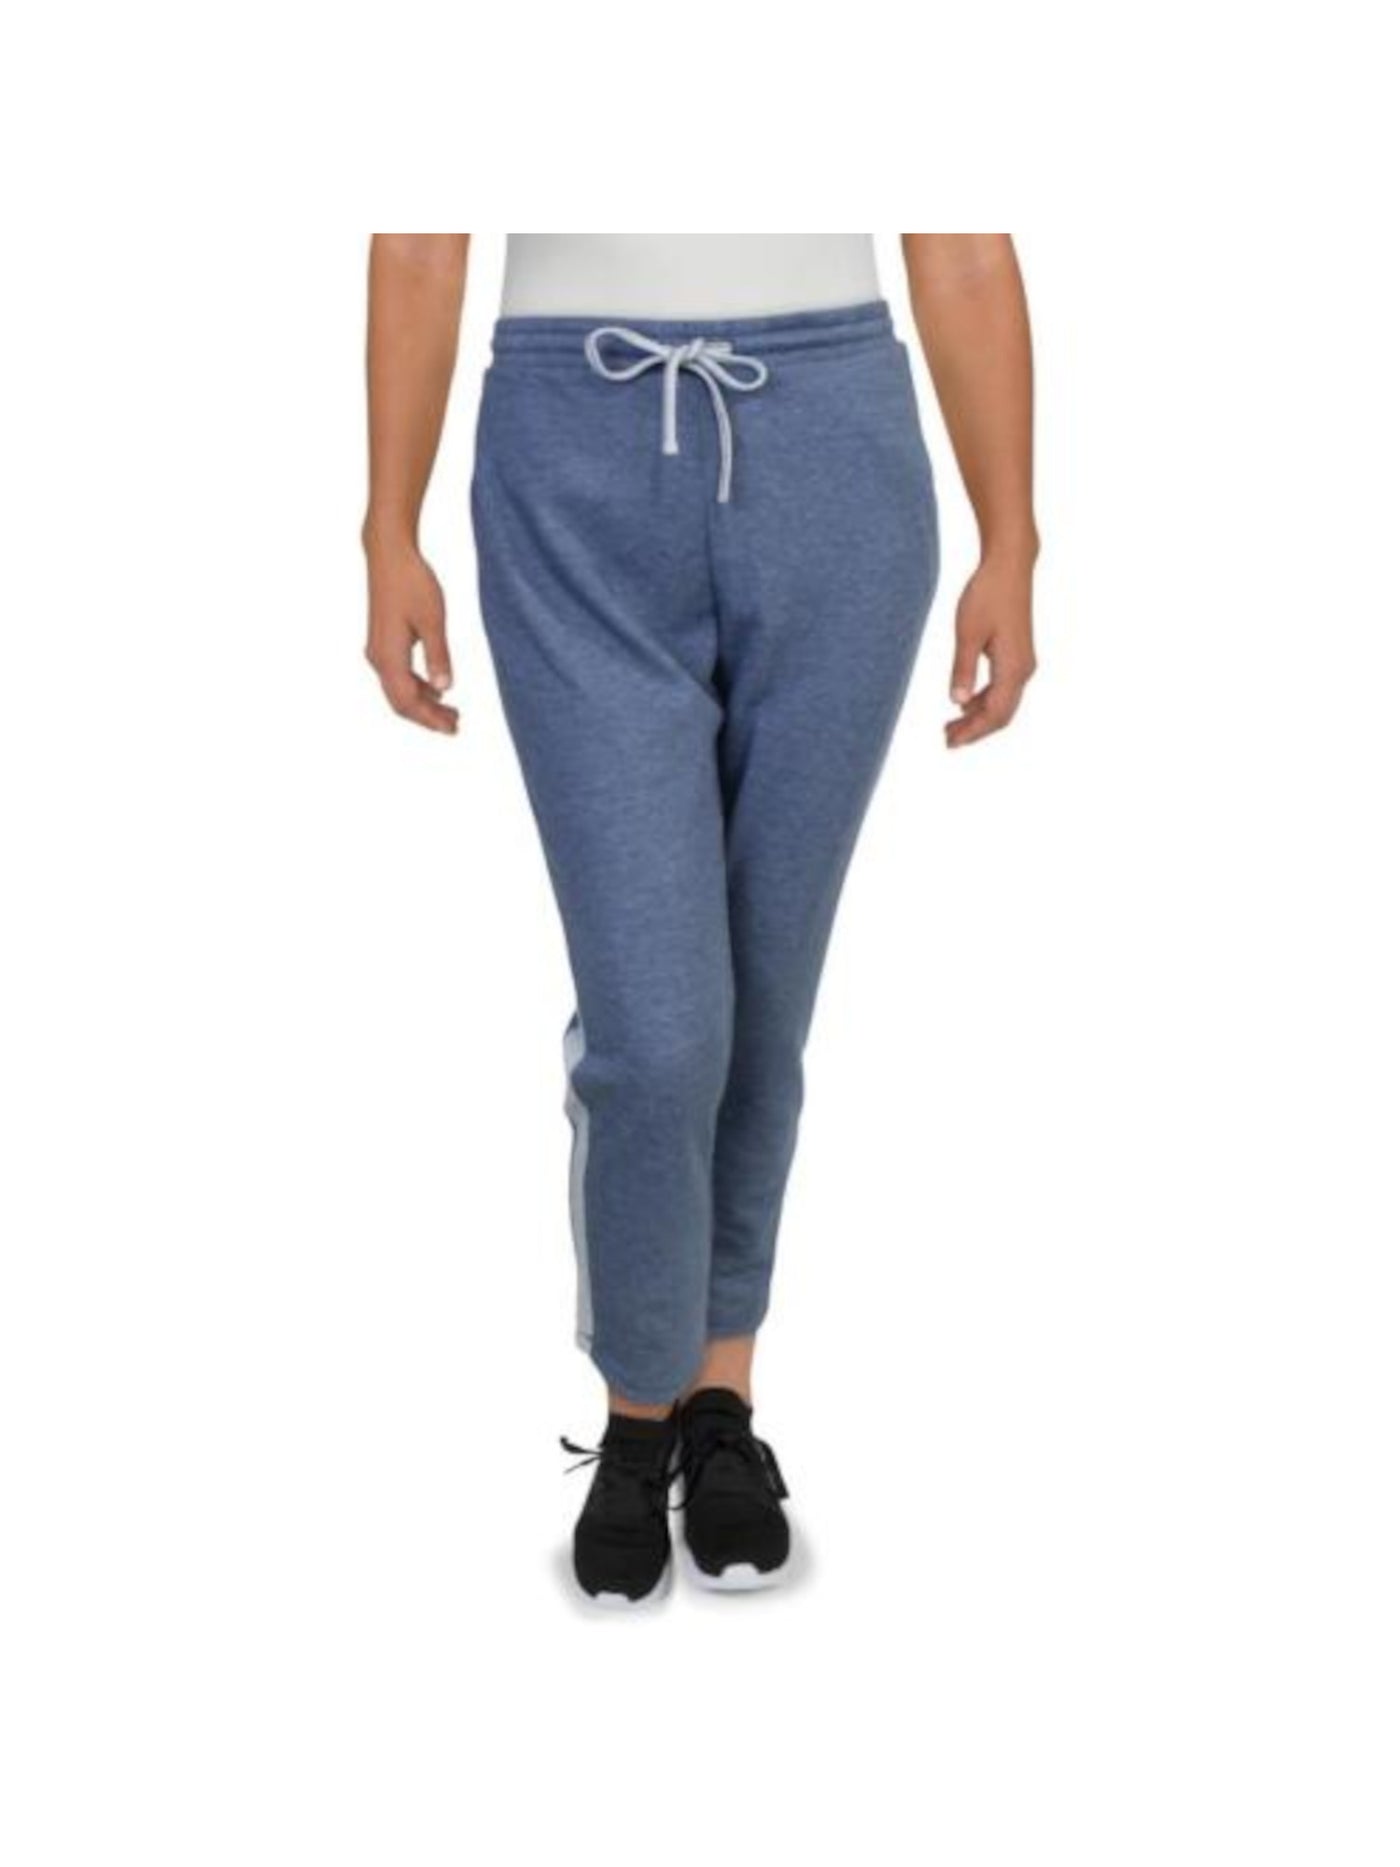 TOMMY BAHAMA Womens Blue Tie Pocketed Elasticized Drawstring Waist Lounge Pants S